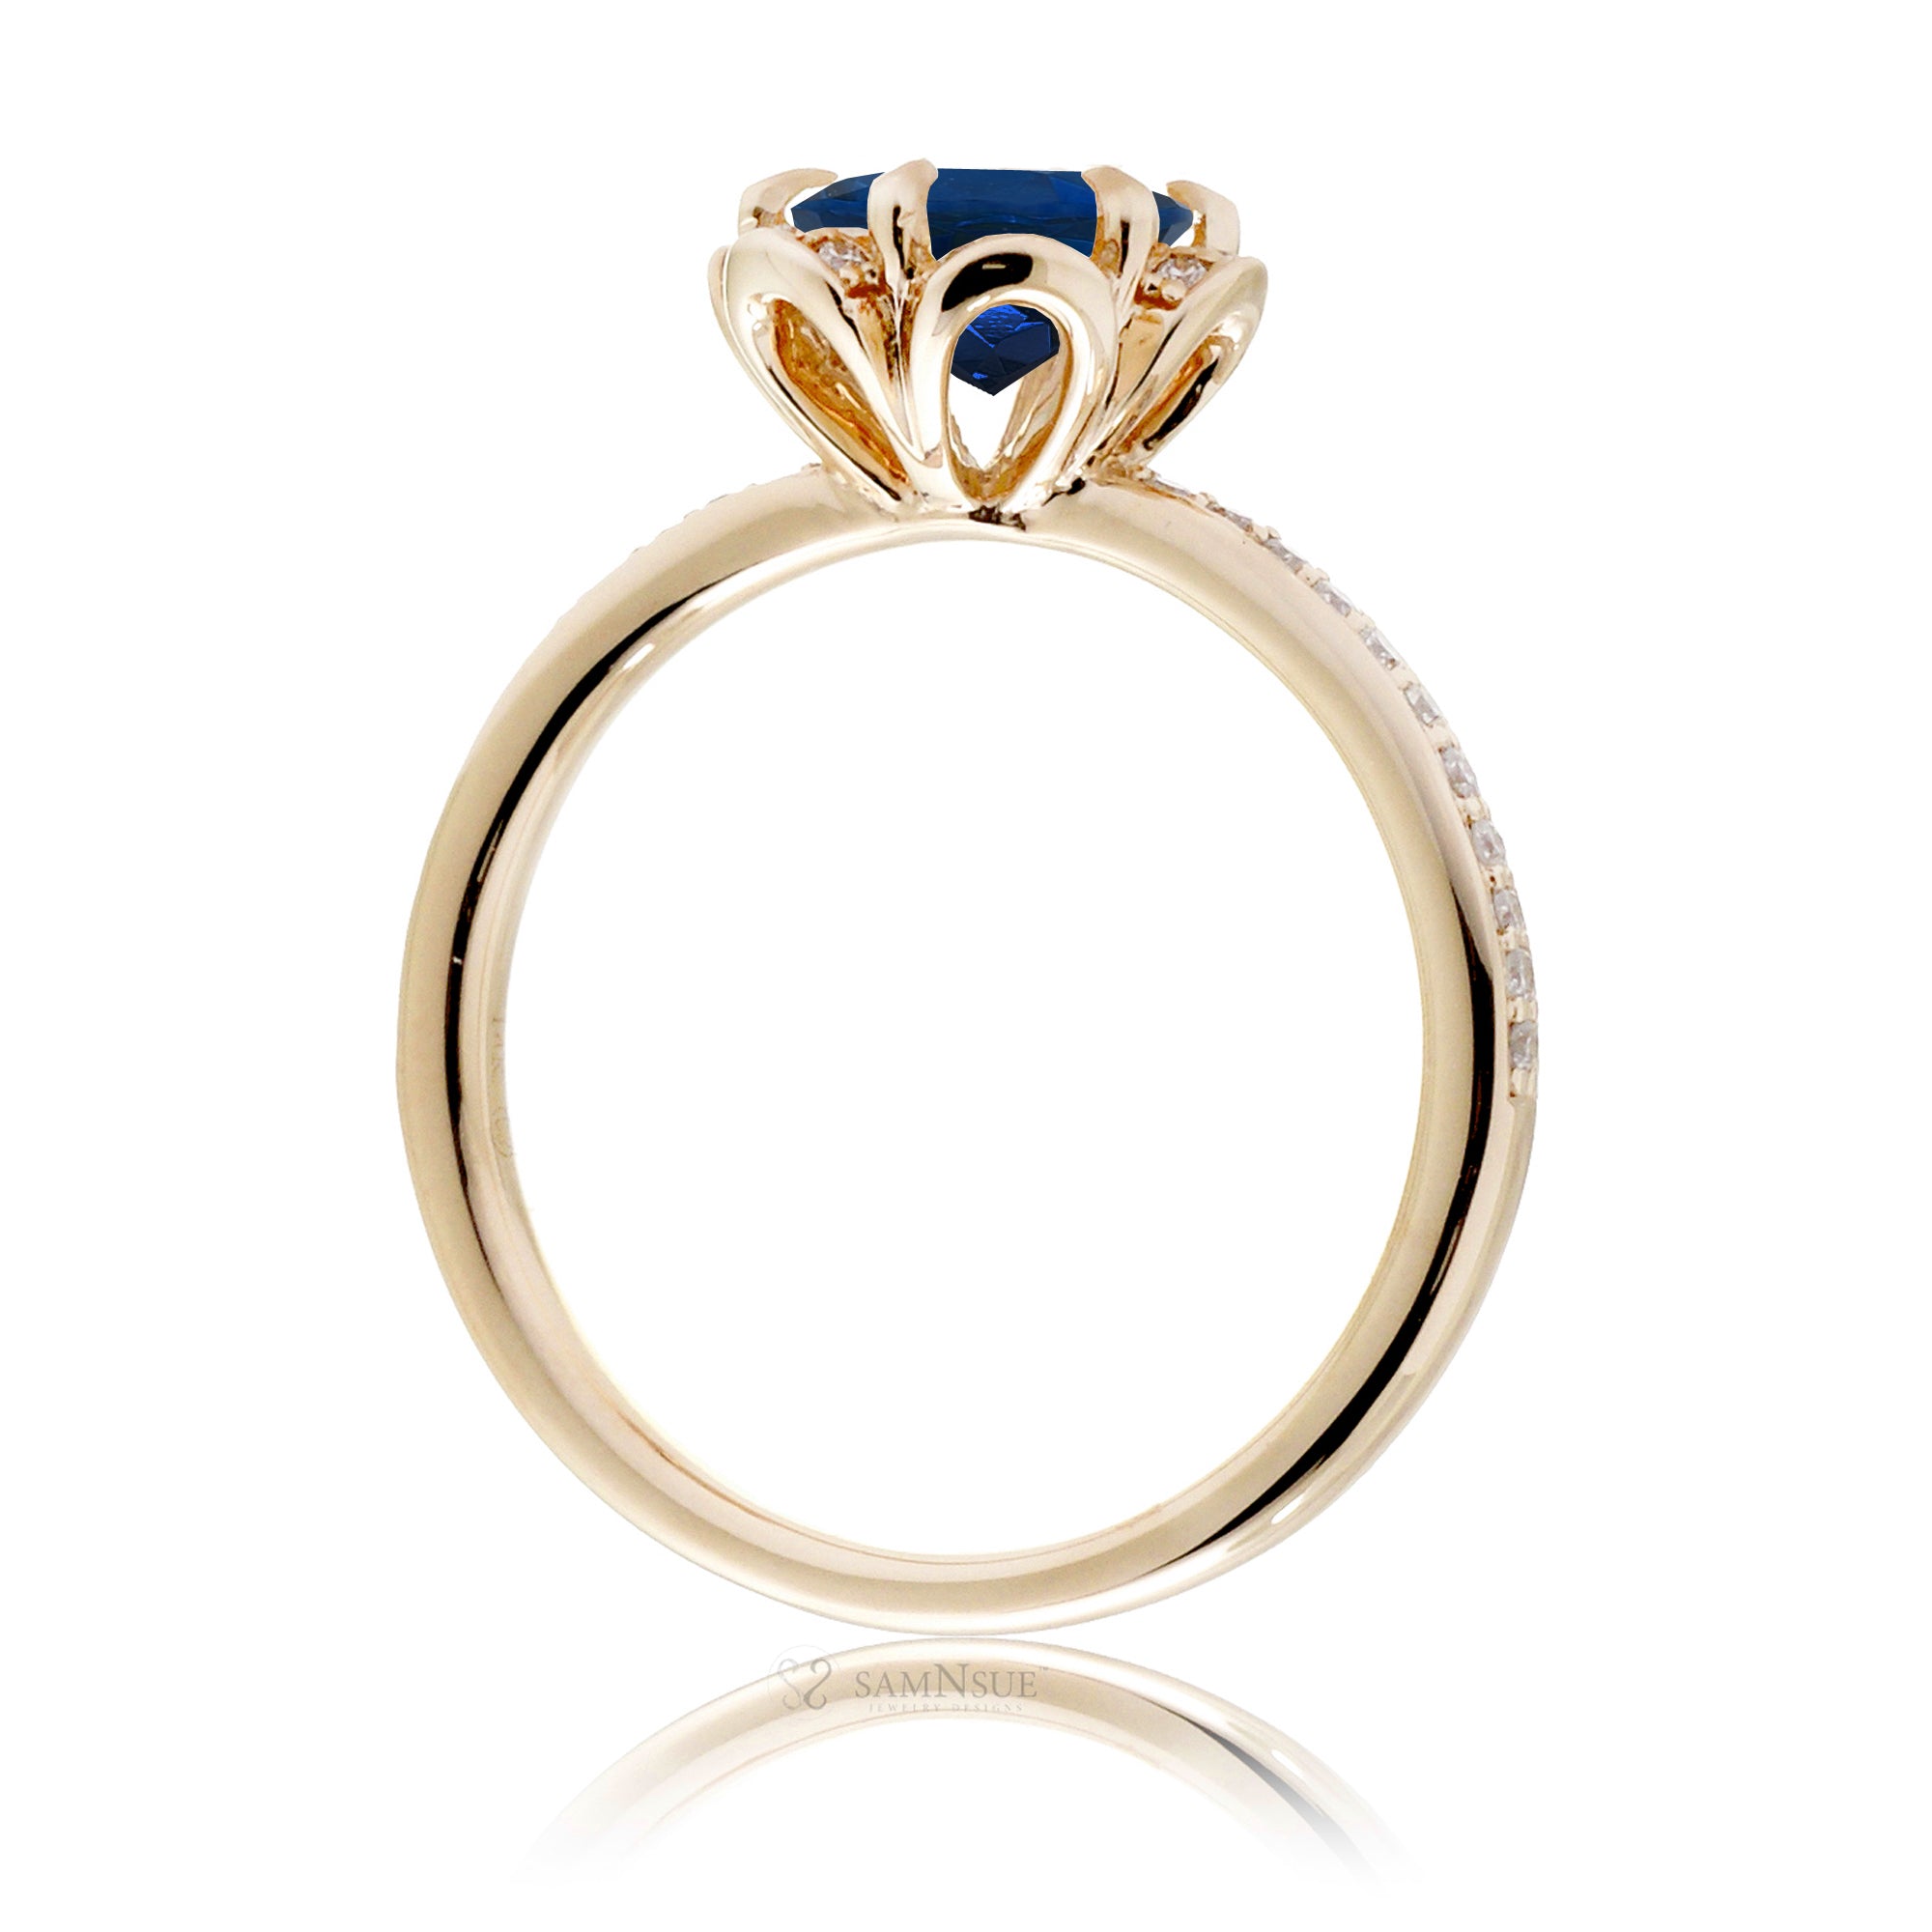 Sapphire ring diamond flower basket engagement ring yellow gold